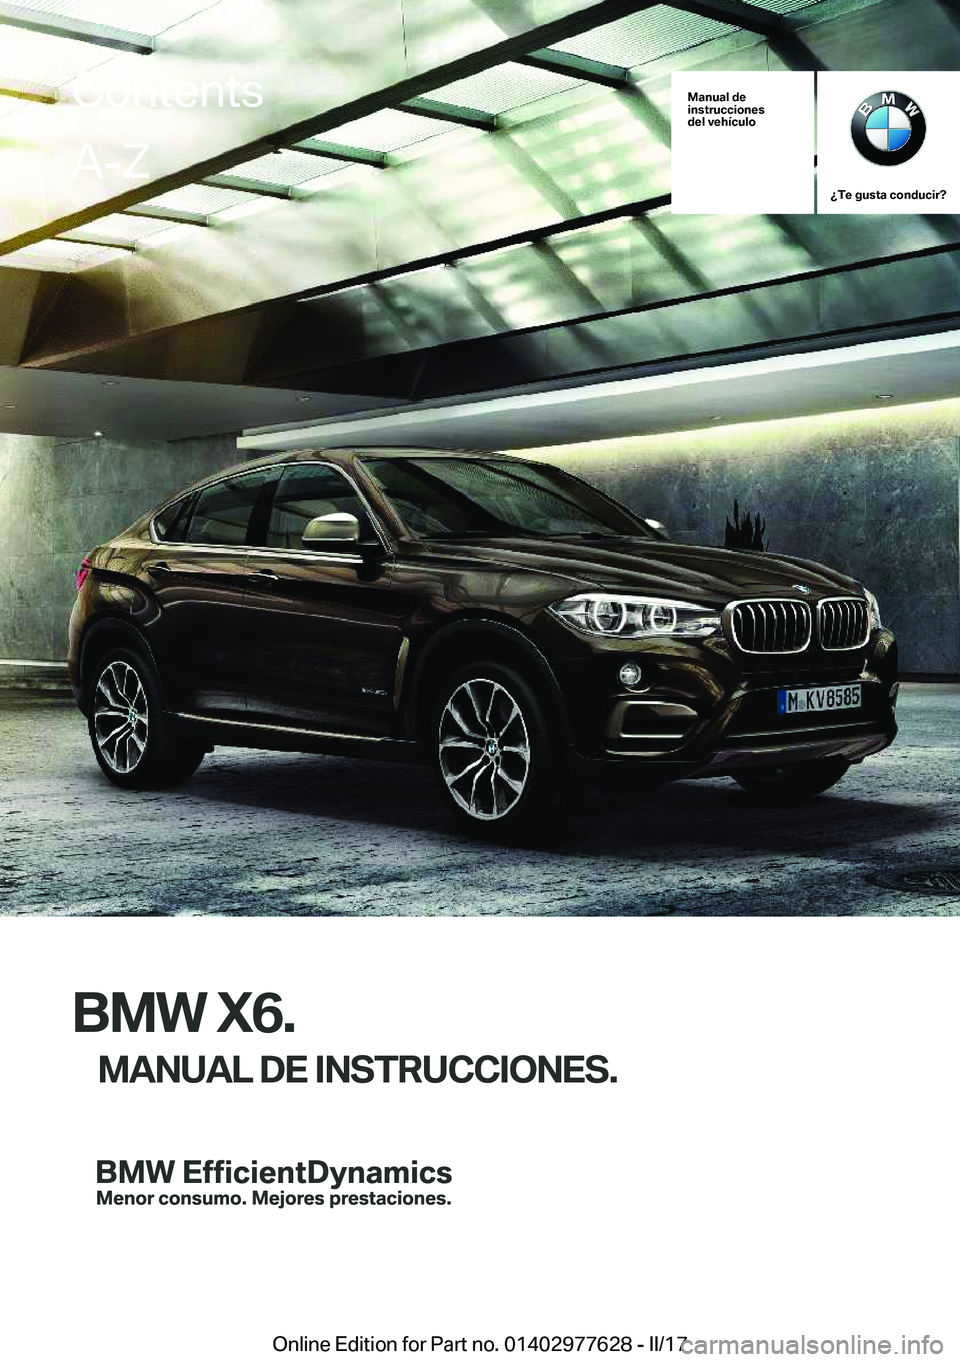 BMW X6 2017  Manuales de Empleo (in Spanish) �M�a�n�u�a�l��d�e
�i�n�s�t�r�u�c�c�i�o�n�e�s
�d�e�l��v�e�h�